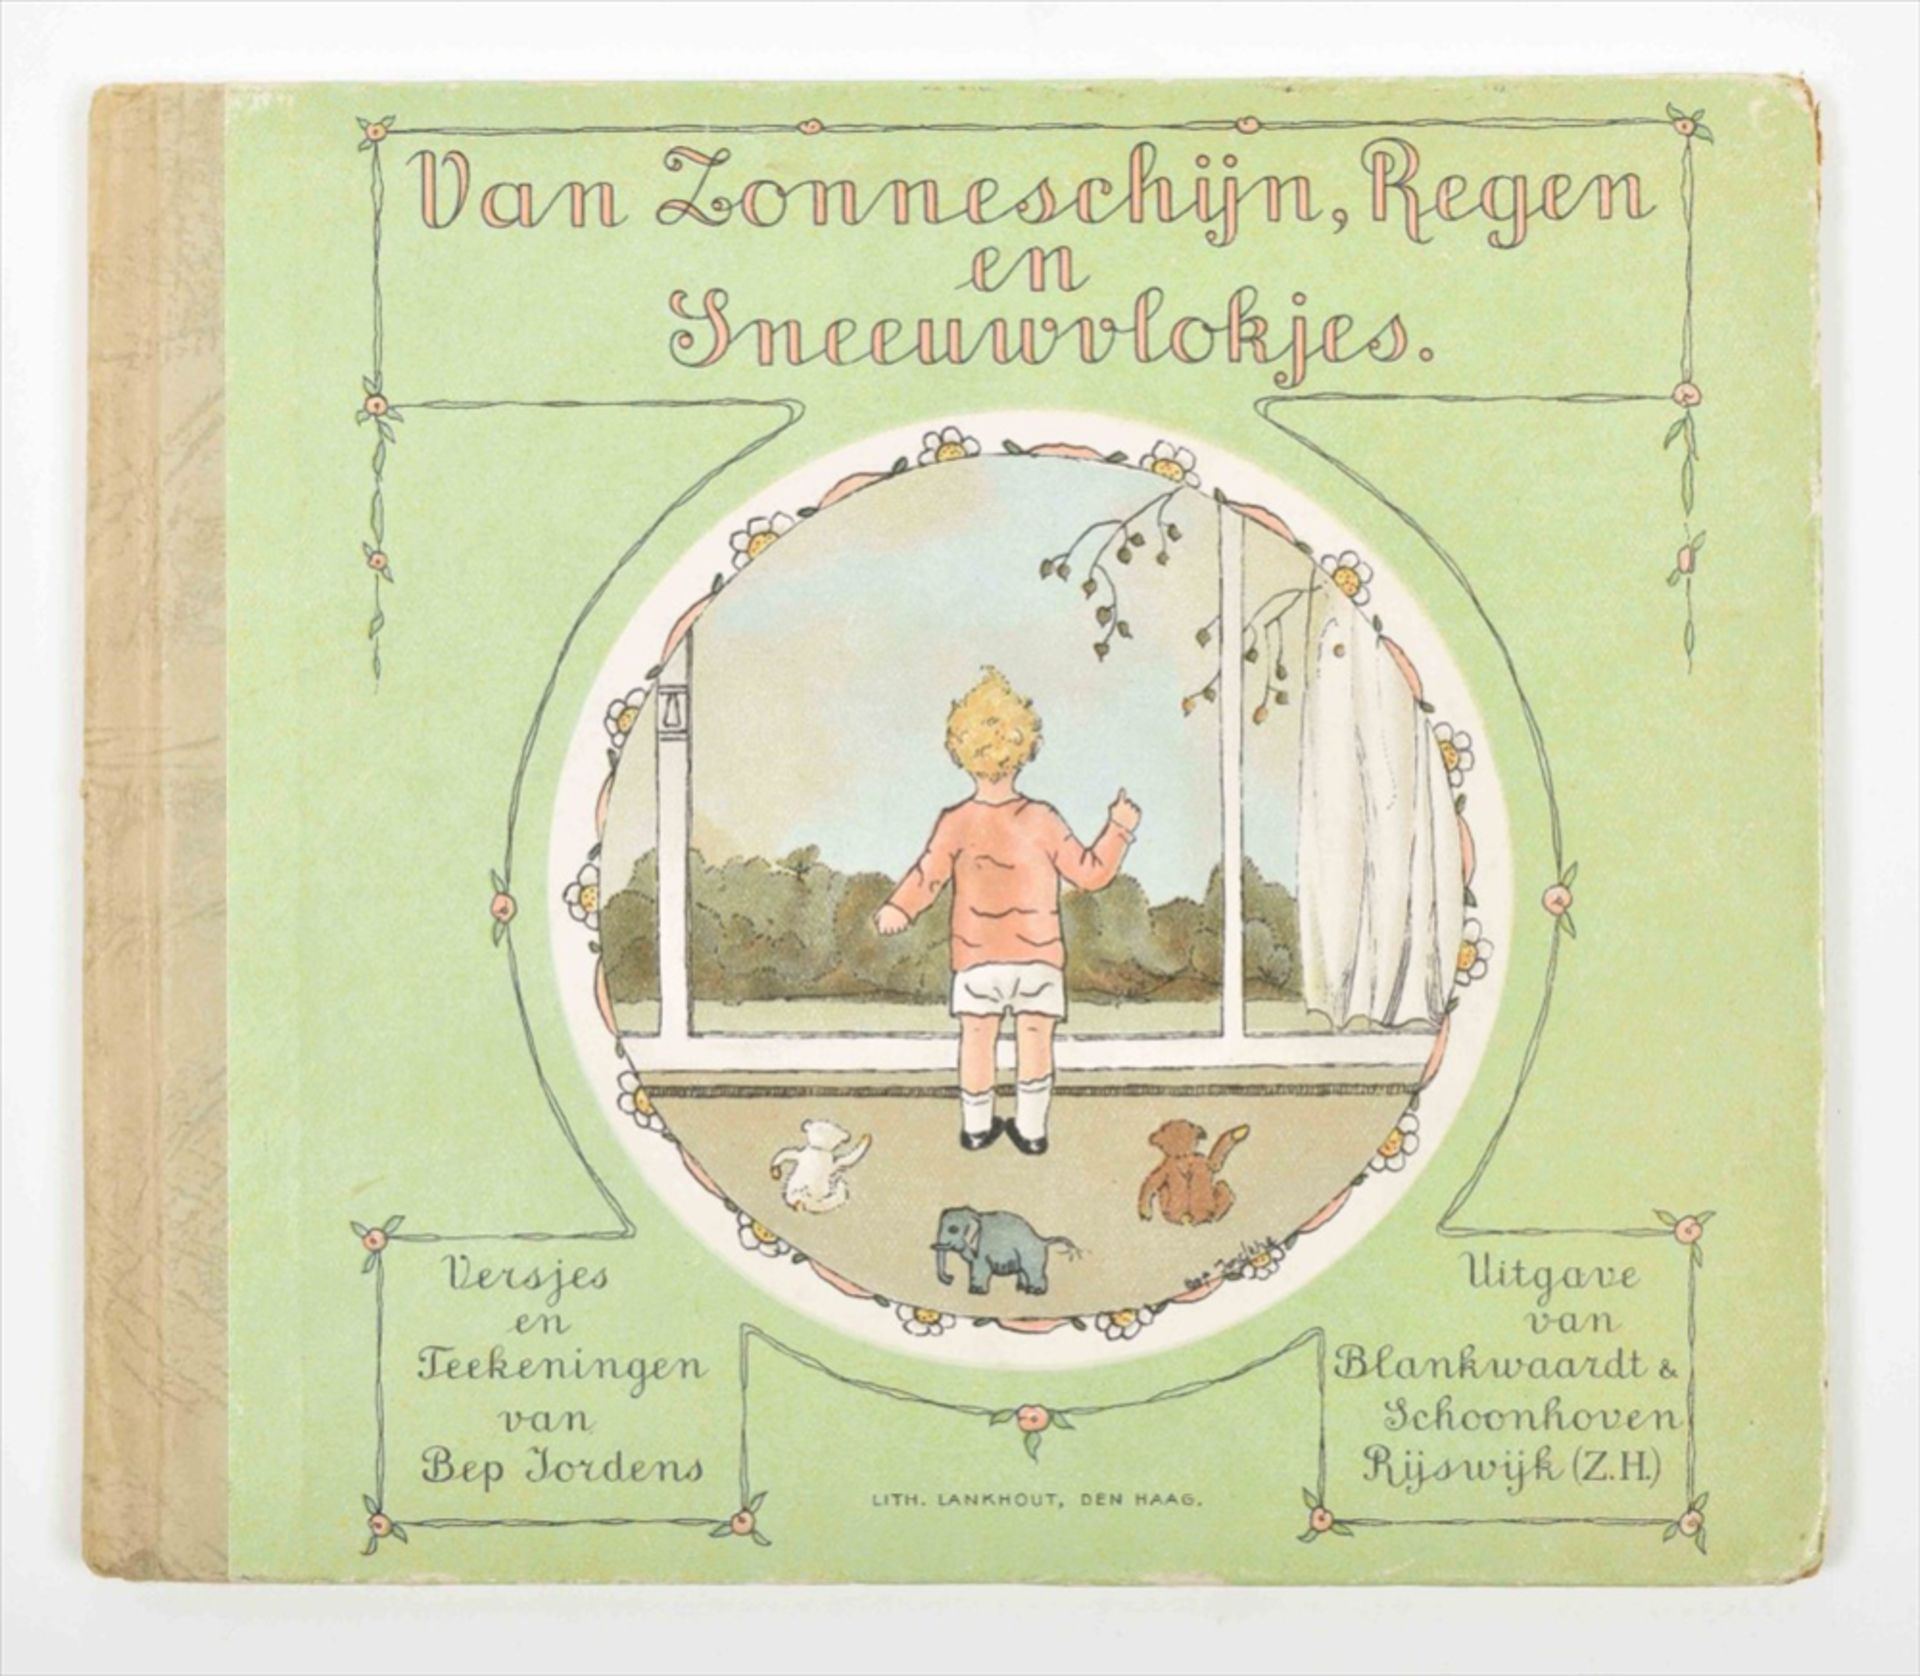 Seven children's books illustrated by Bep Jordens - Image 15 of 20